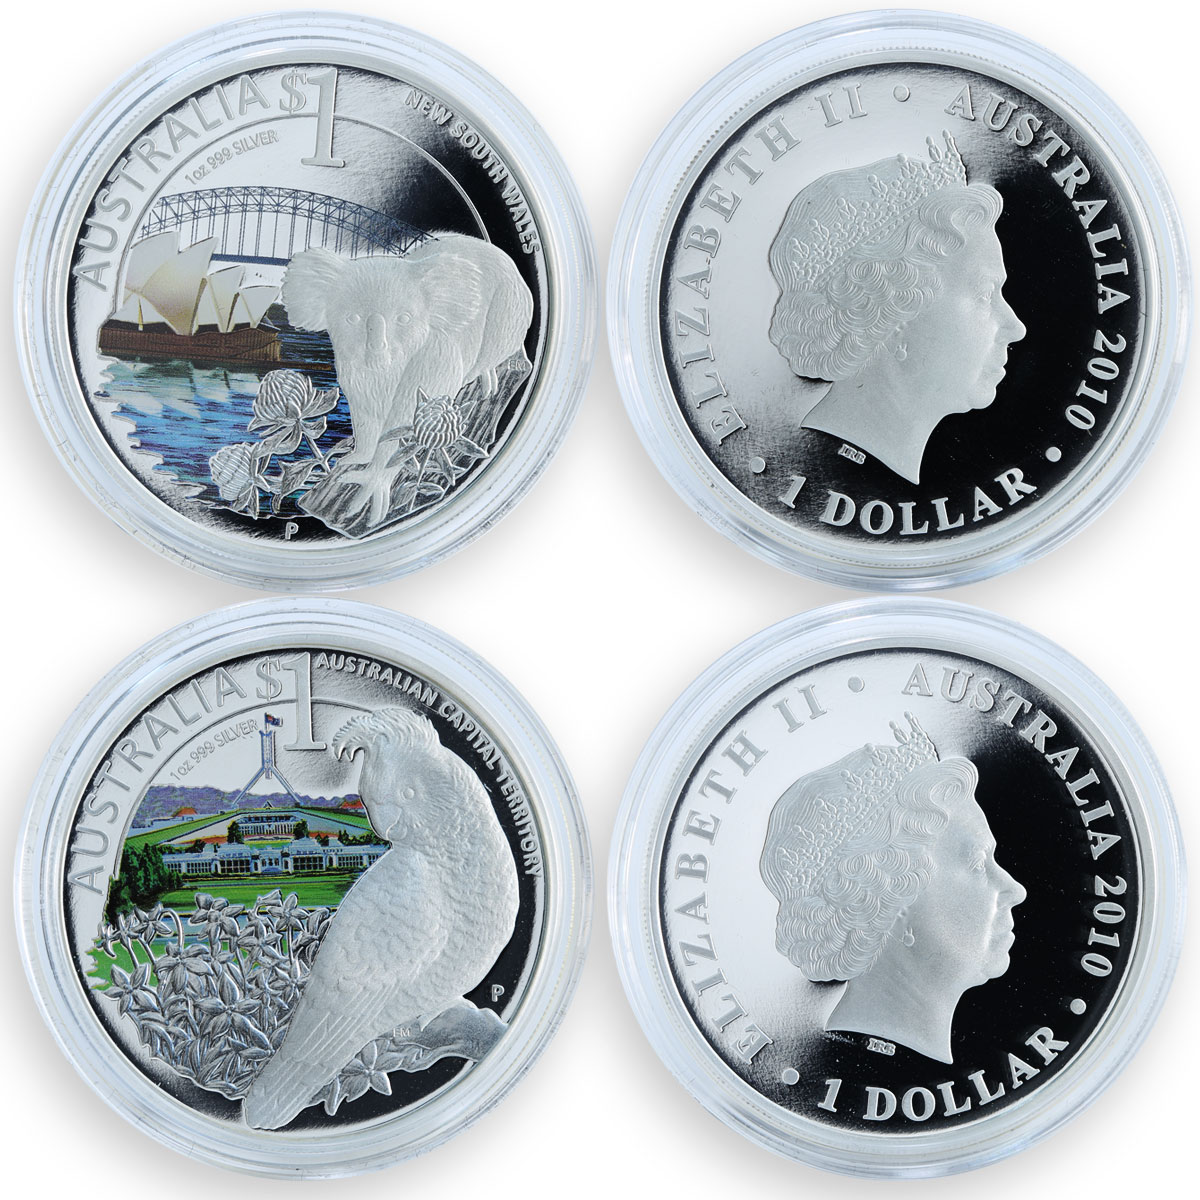 Australia set of 4 coins animals wild nature silver 1 oz coin 2010